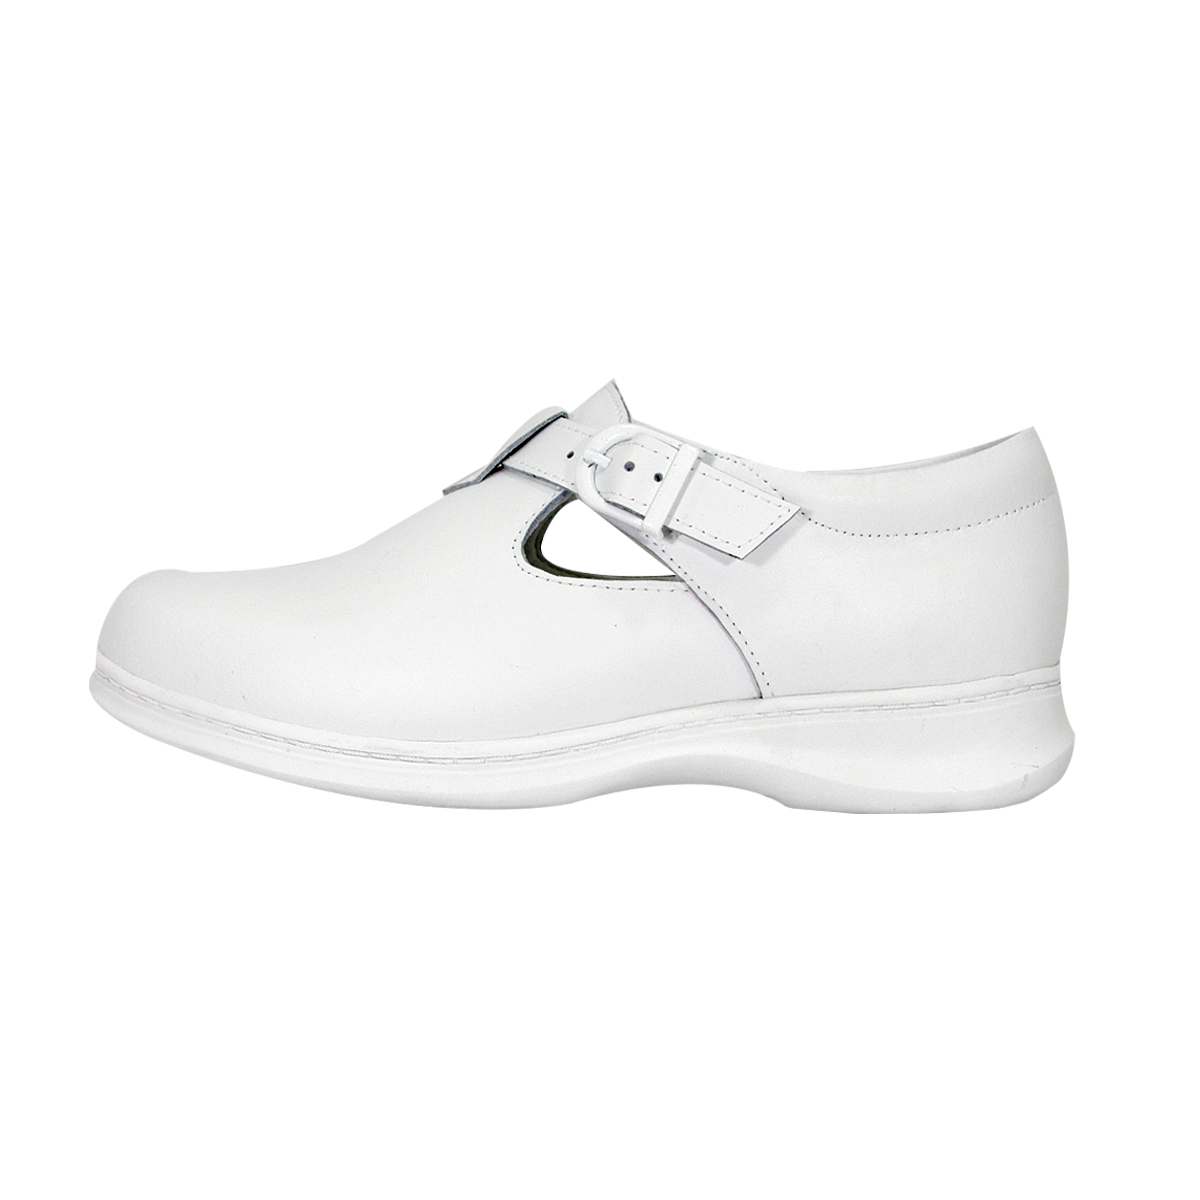 24 HOUR COMFORT Willa Wide Width Professional Sleek Shoe WHITE 5.5 - image 3 of 7